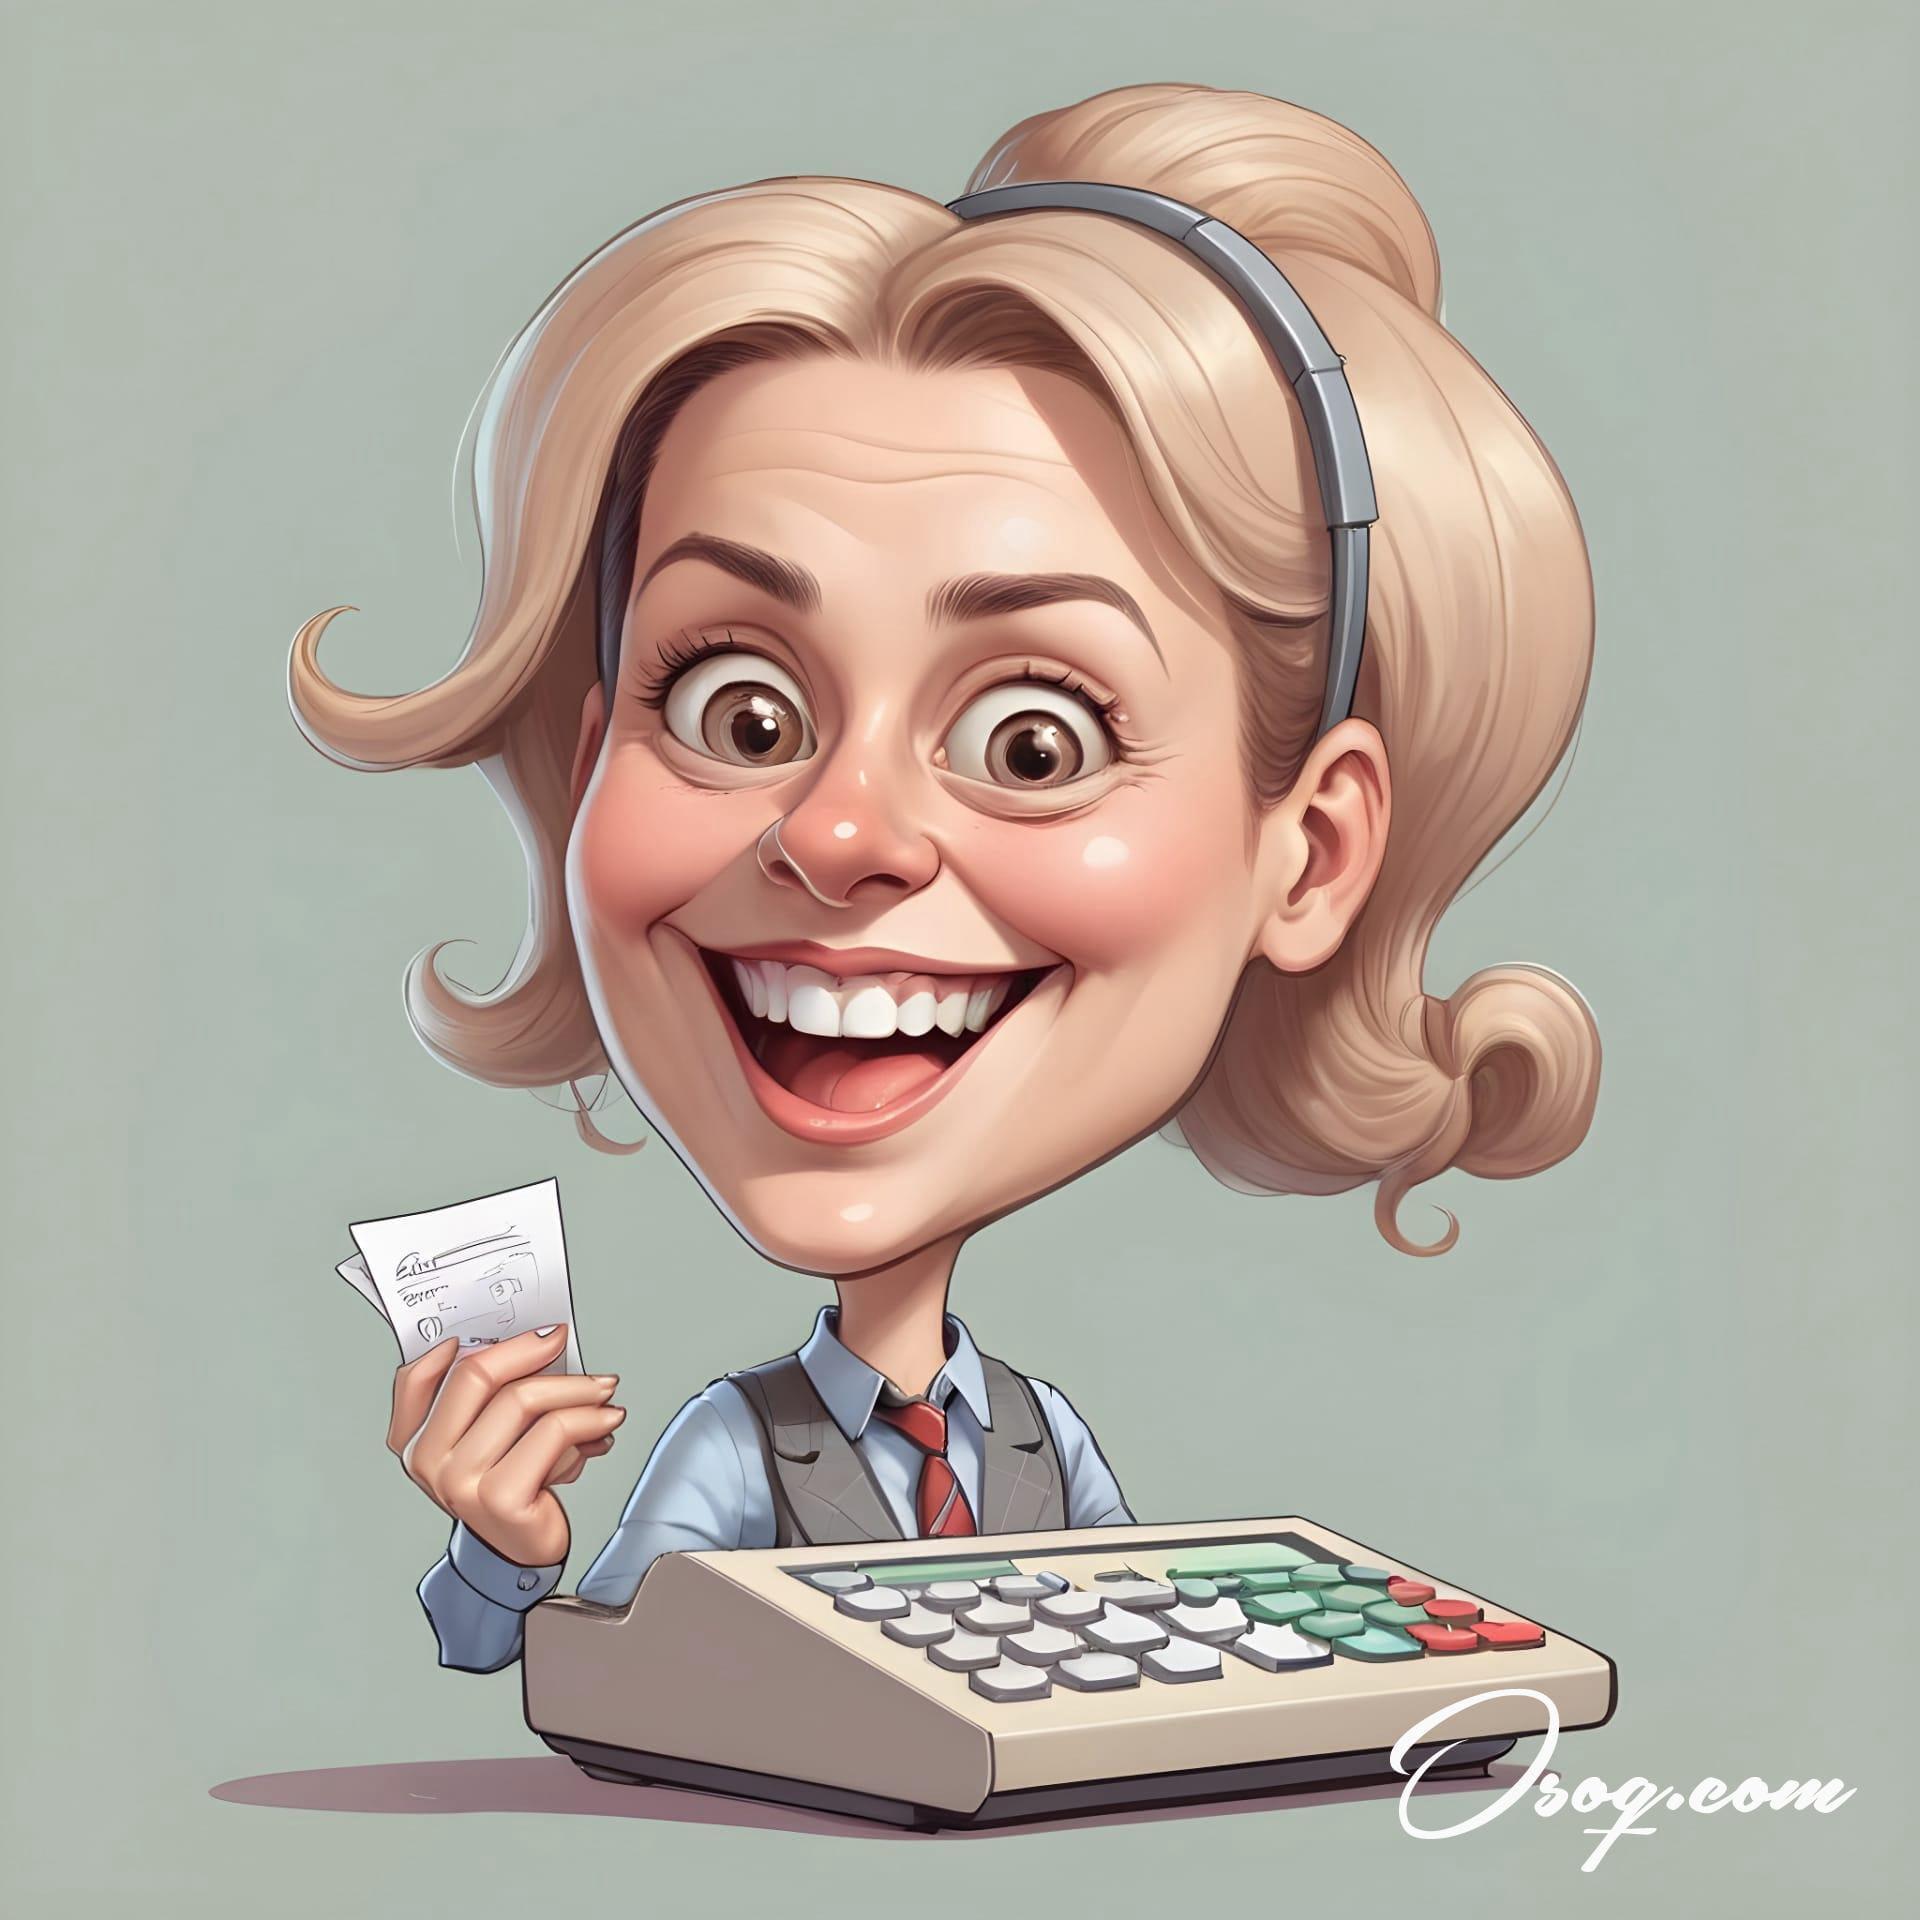 Accountant caricature 01